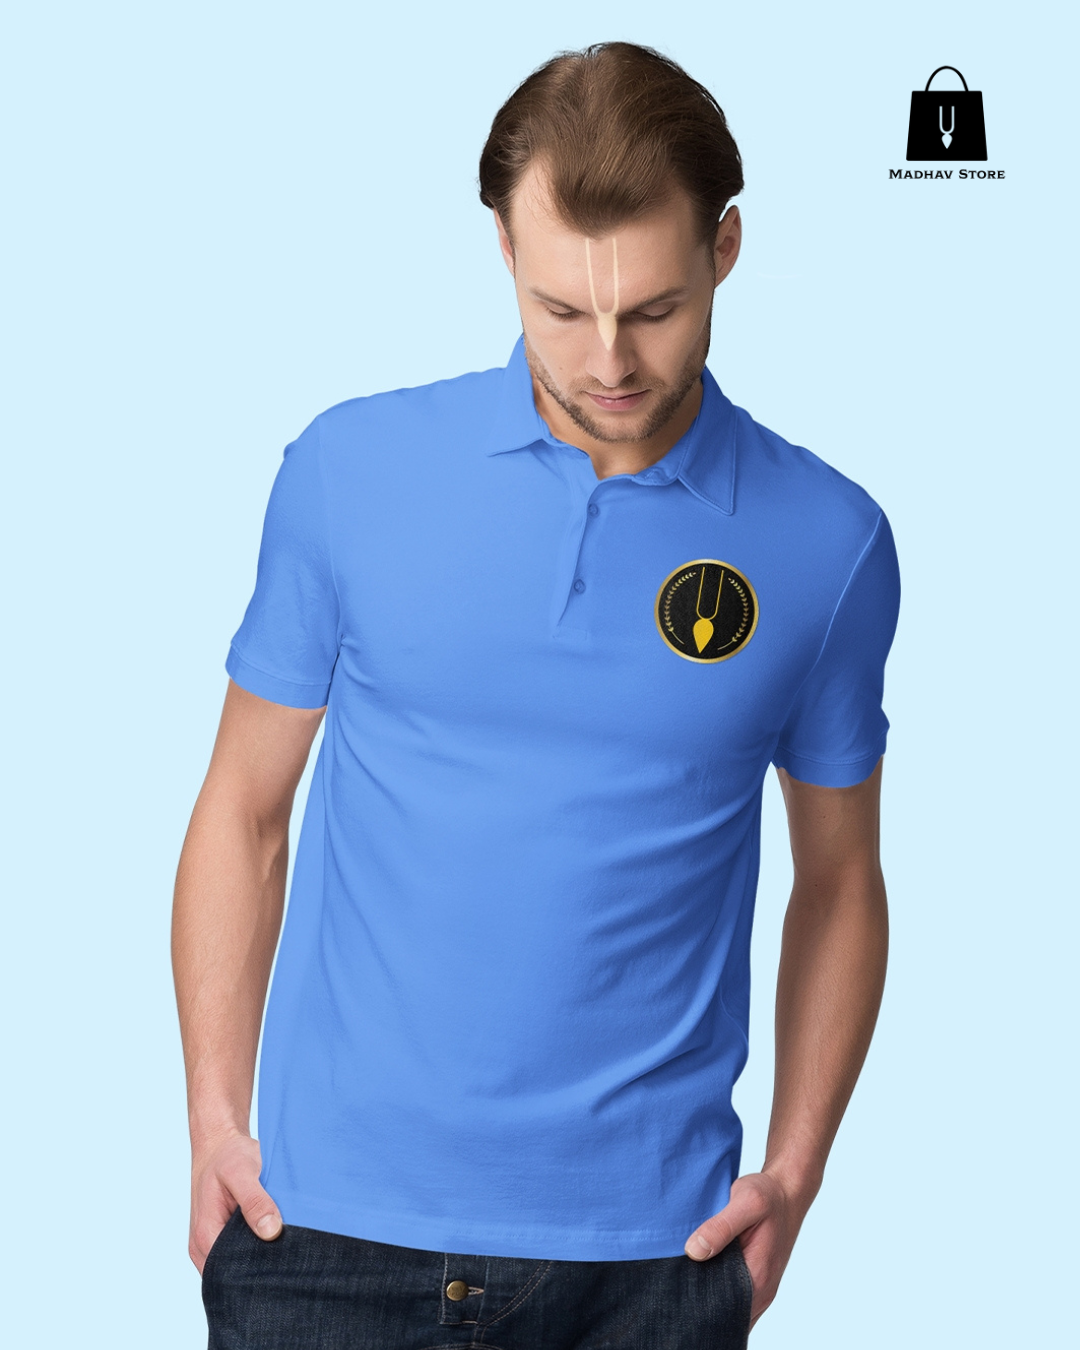 Classic Iskconinc Merchandise logo Polo Tshirt for Men